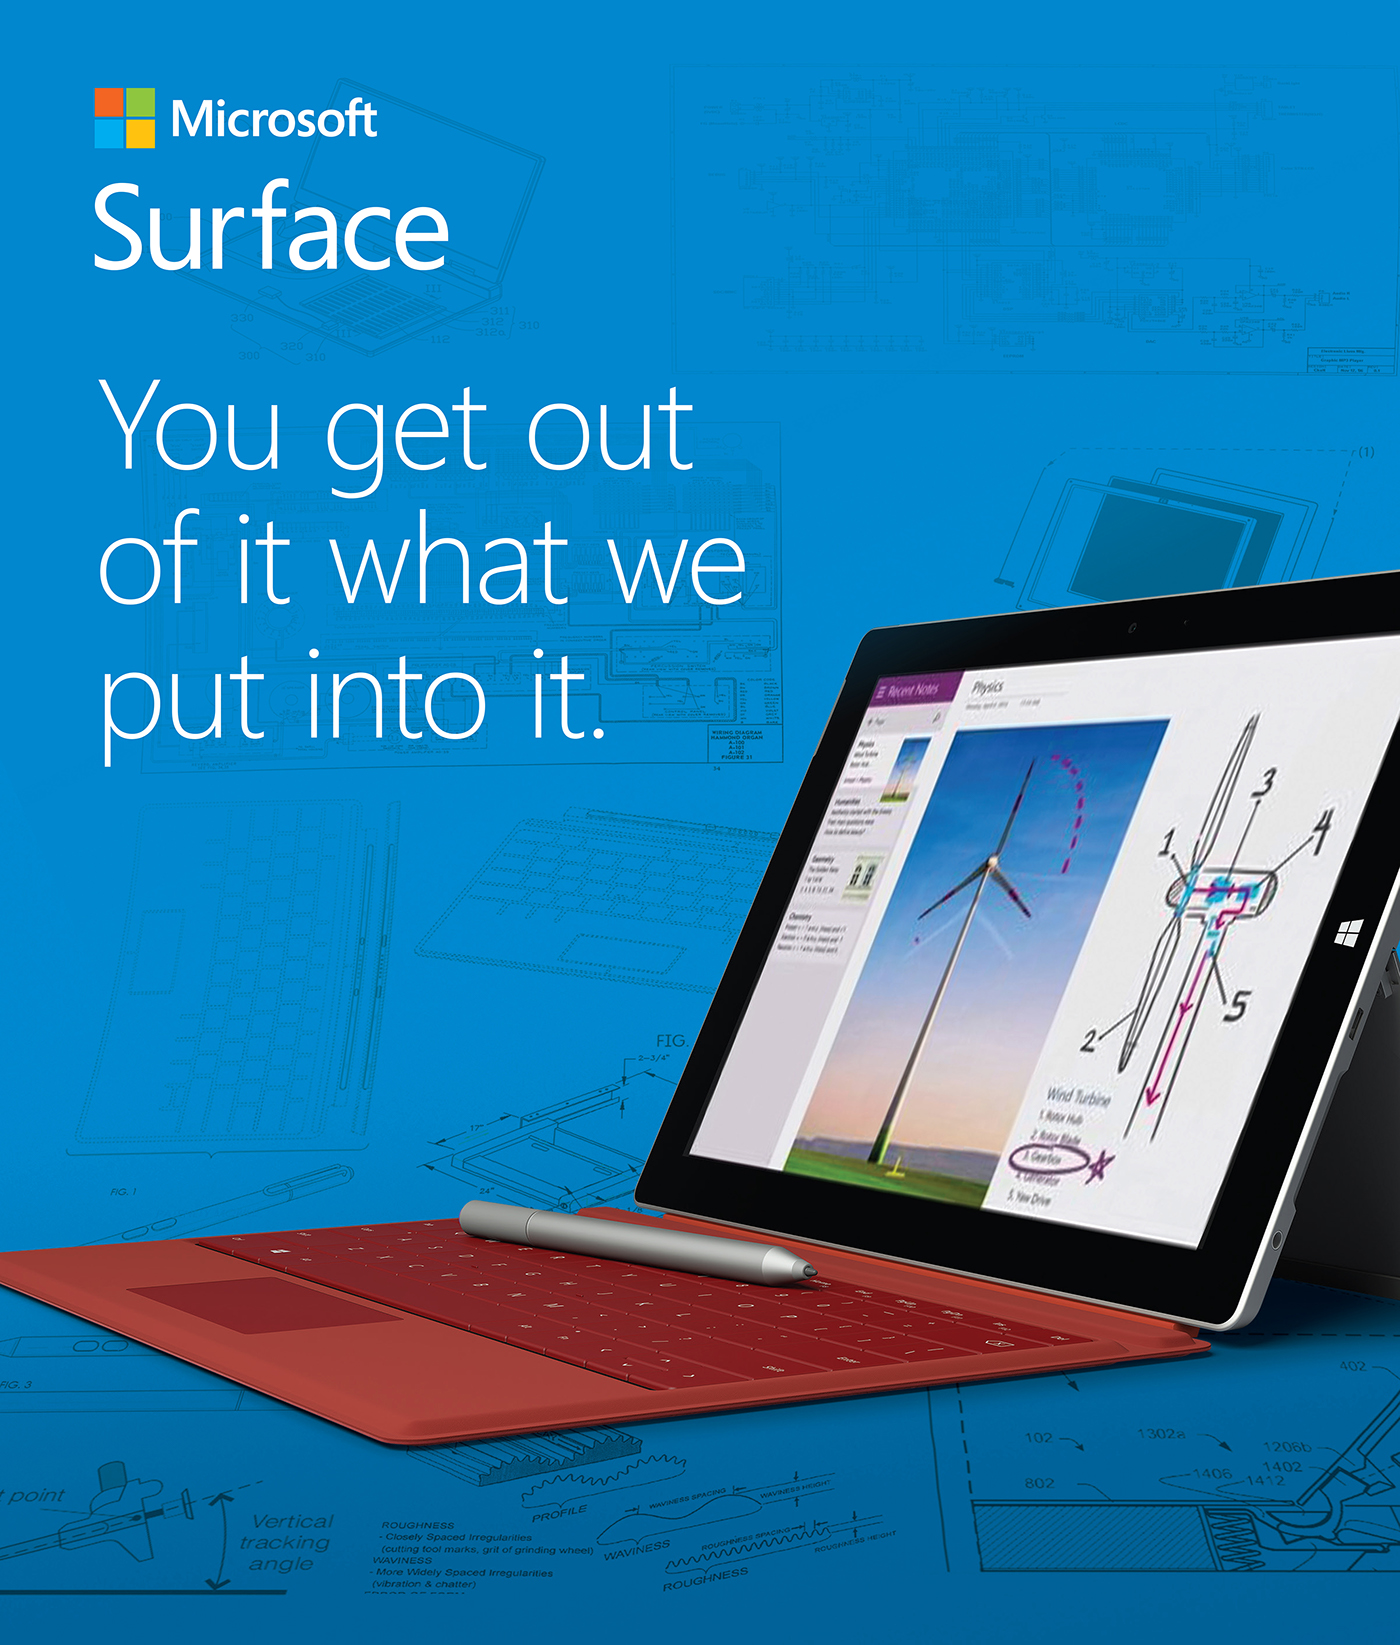 Microsoft surface tech computers Technology